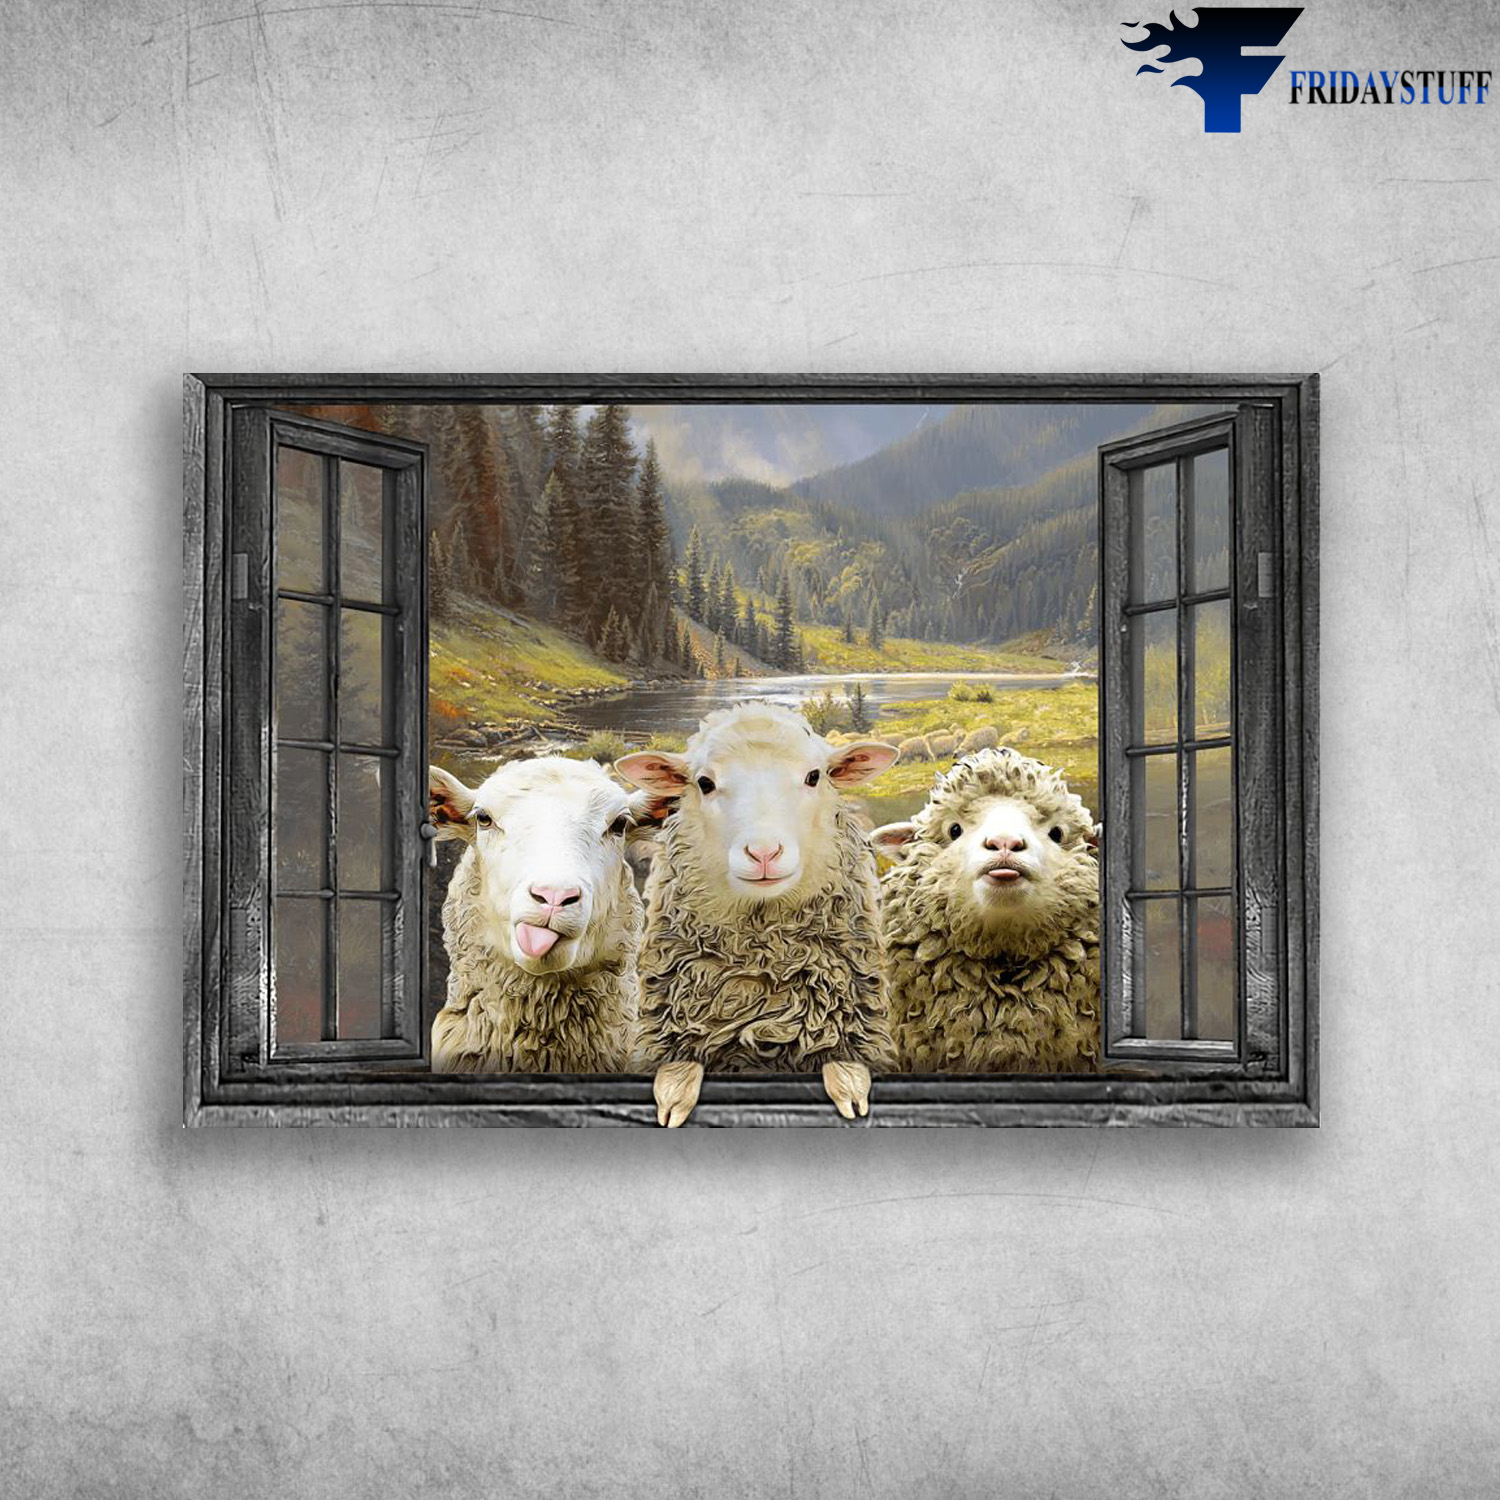 The Sheeps Outside The Window